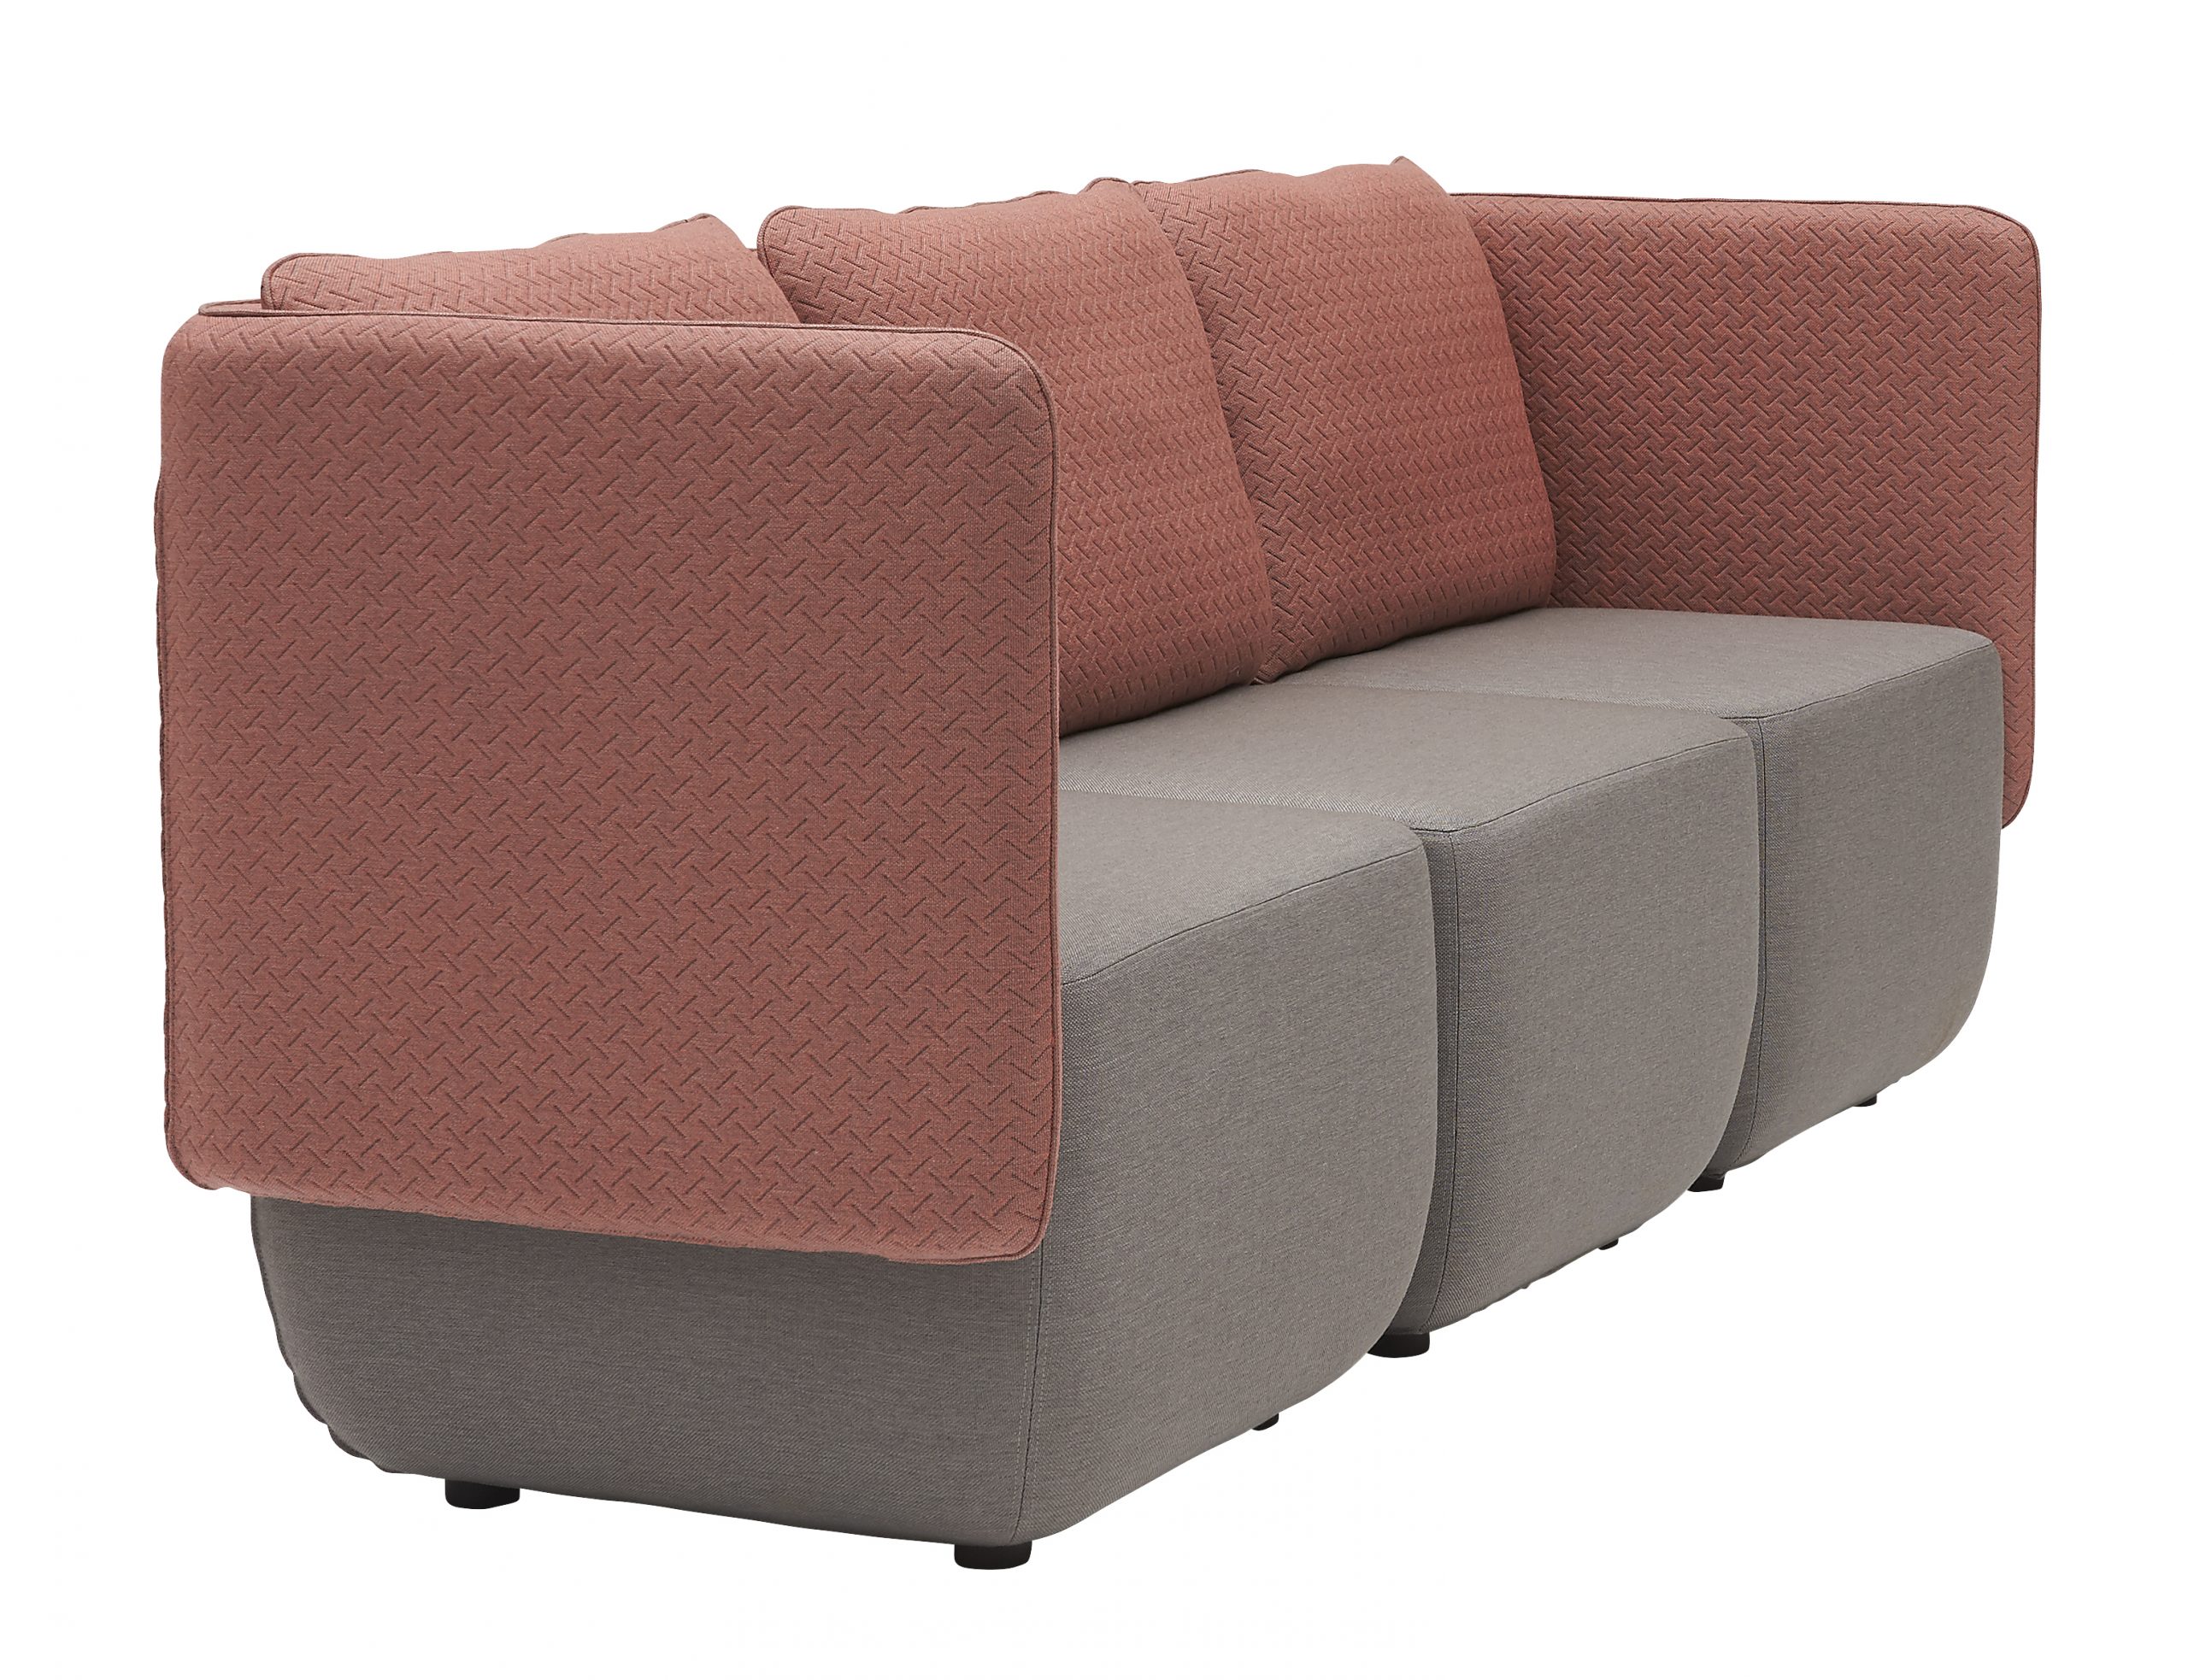 opera-modular-sofa-high-res-30-scaled.jpg